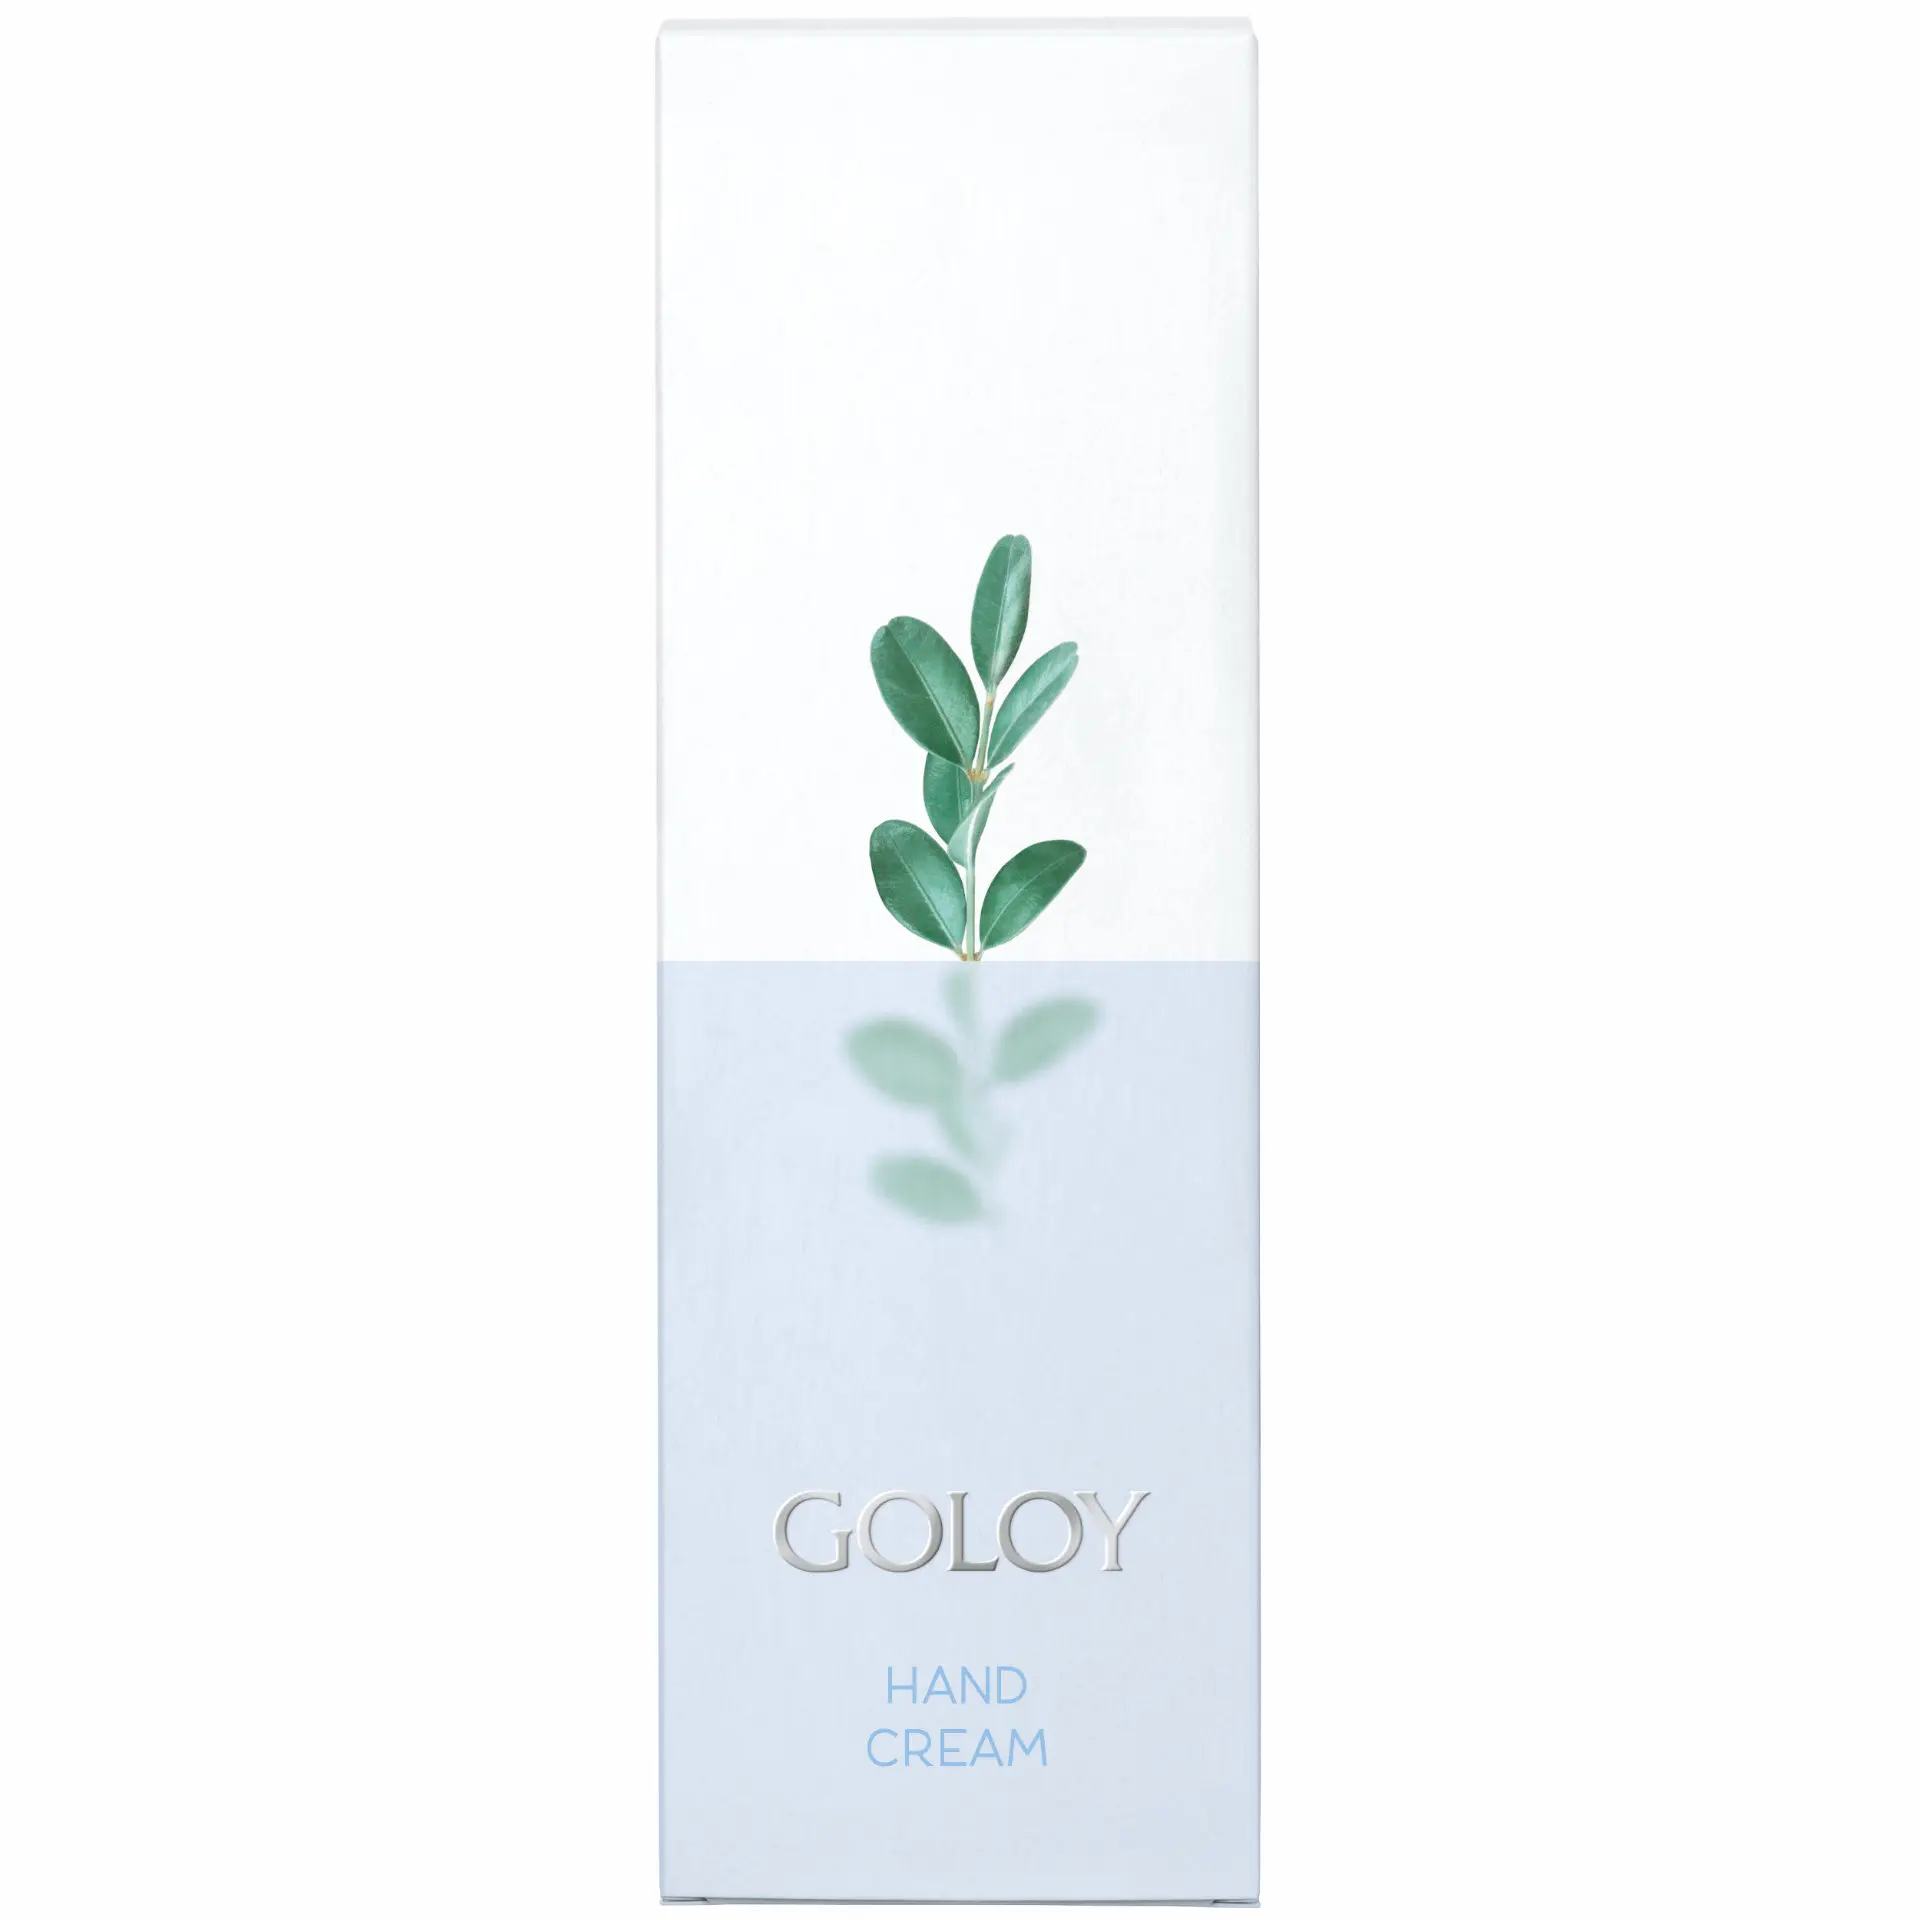 Goloy Hand Cream